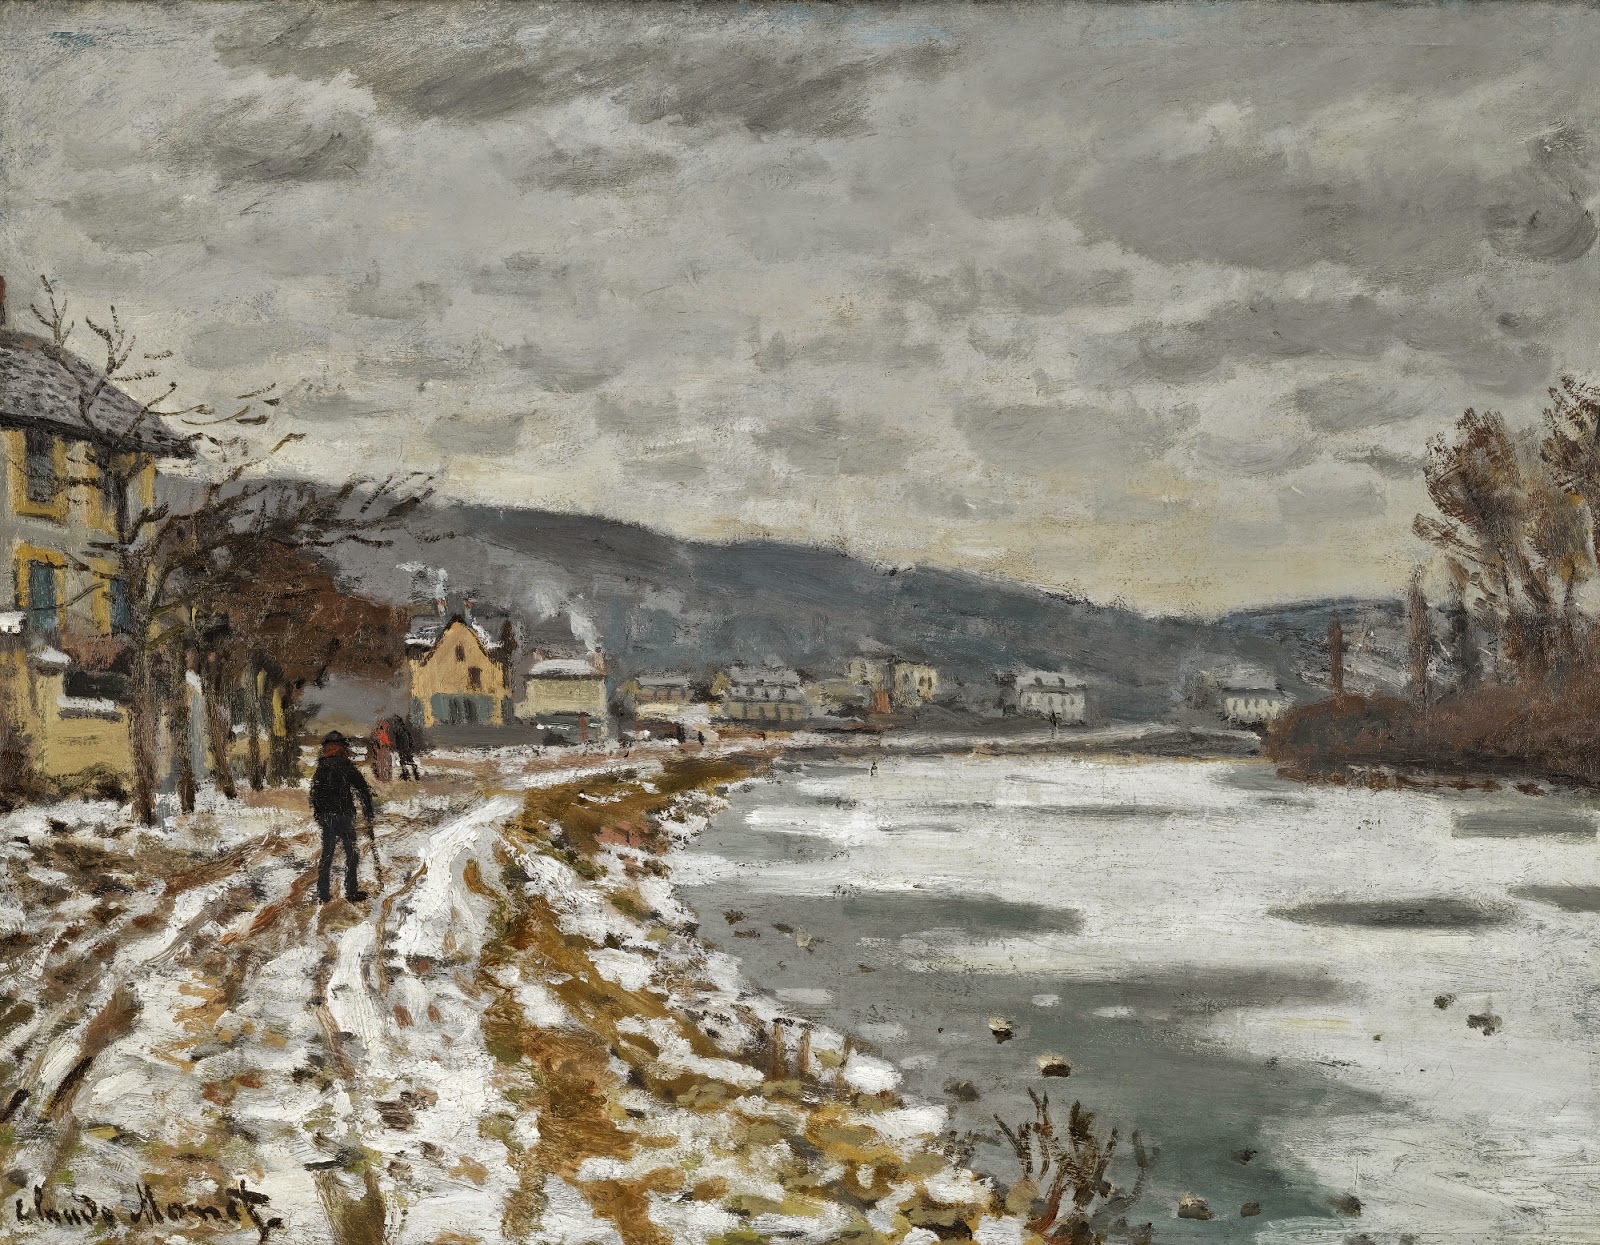 Claude+Monet-1840-1926 (507).jpg